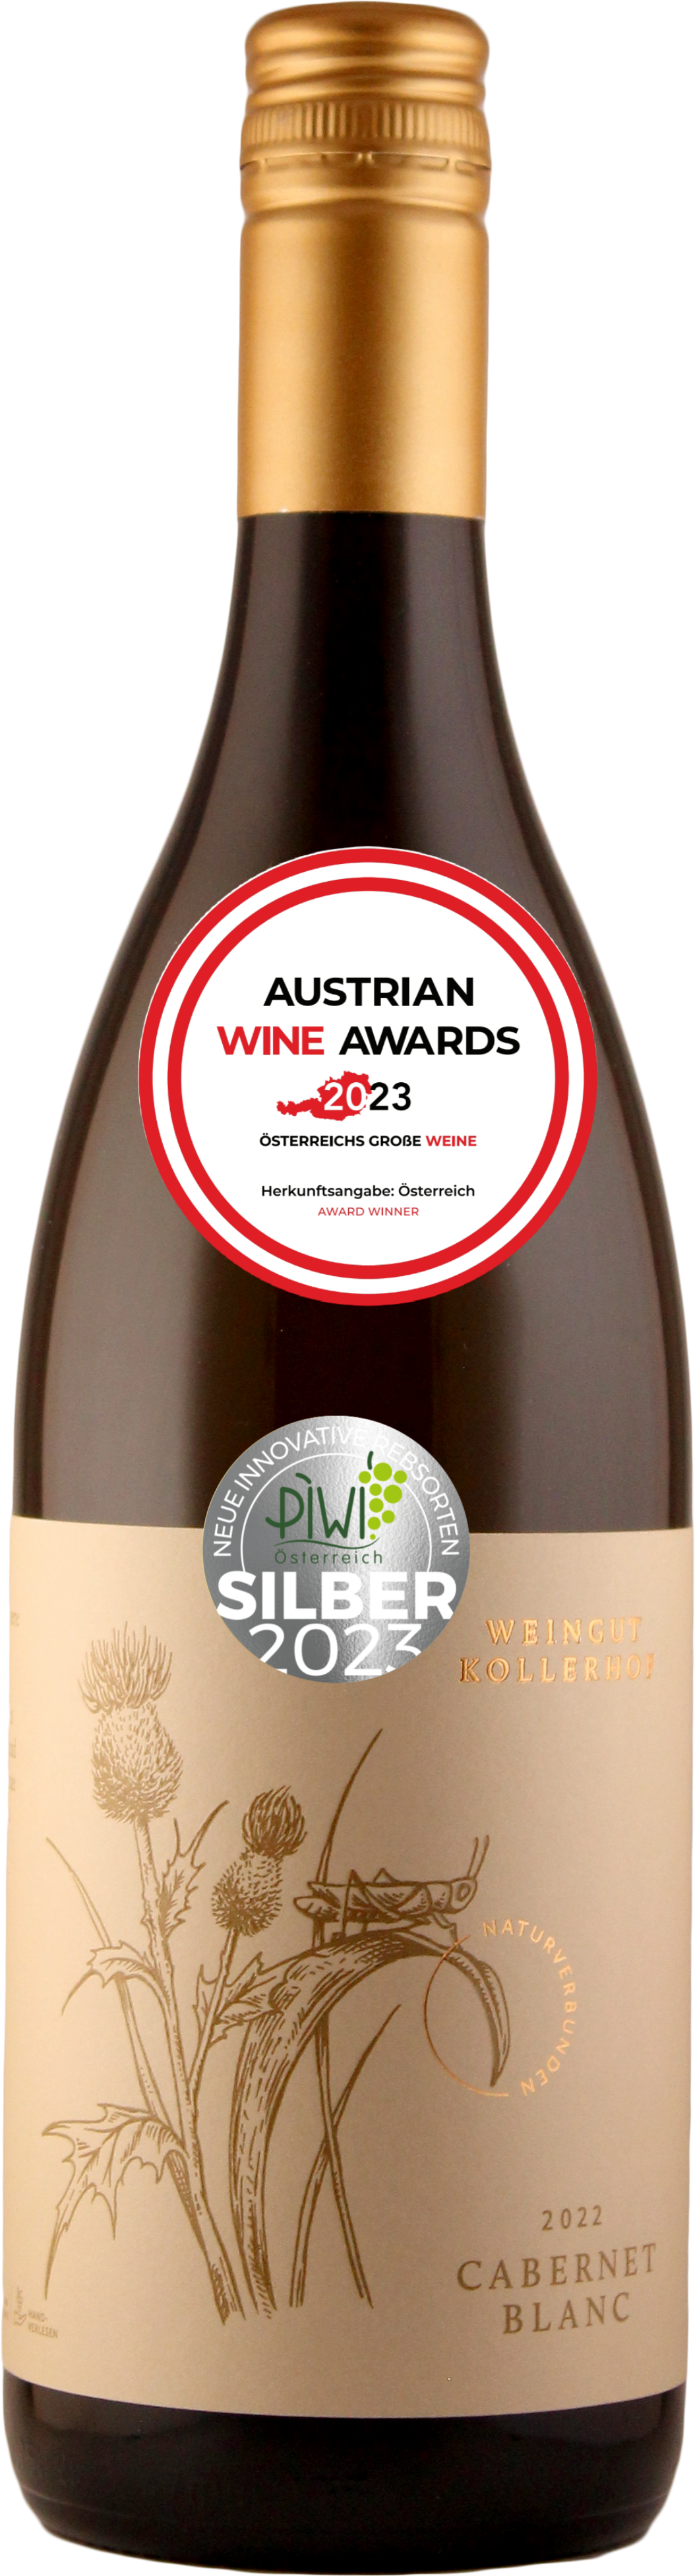 PIWI CABERNET BLANC  2022 Austrian WINE Awards SIEGER